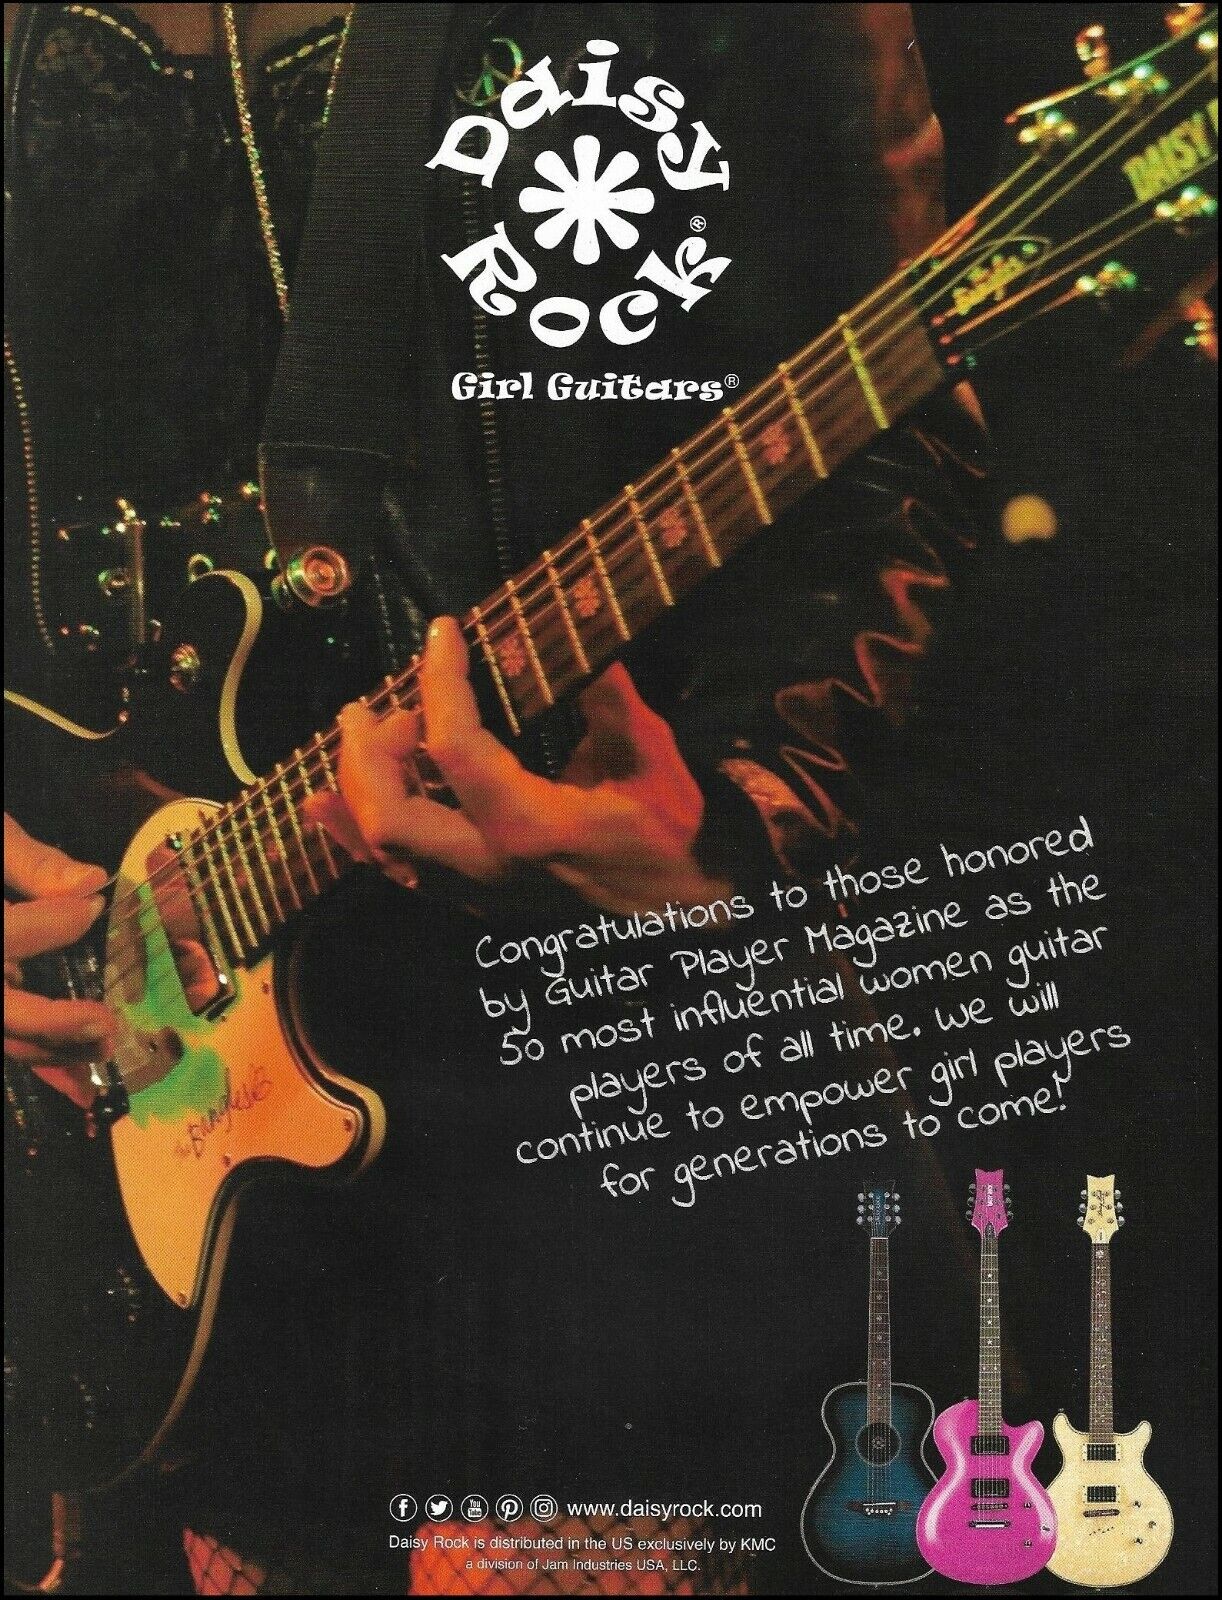 Daisy Rock Girl Guitars 2017 advertisement 8 x 11 color guitar ad print